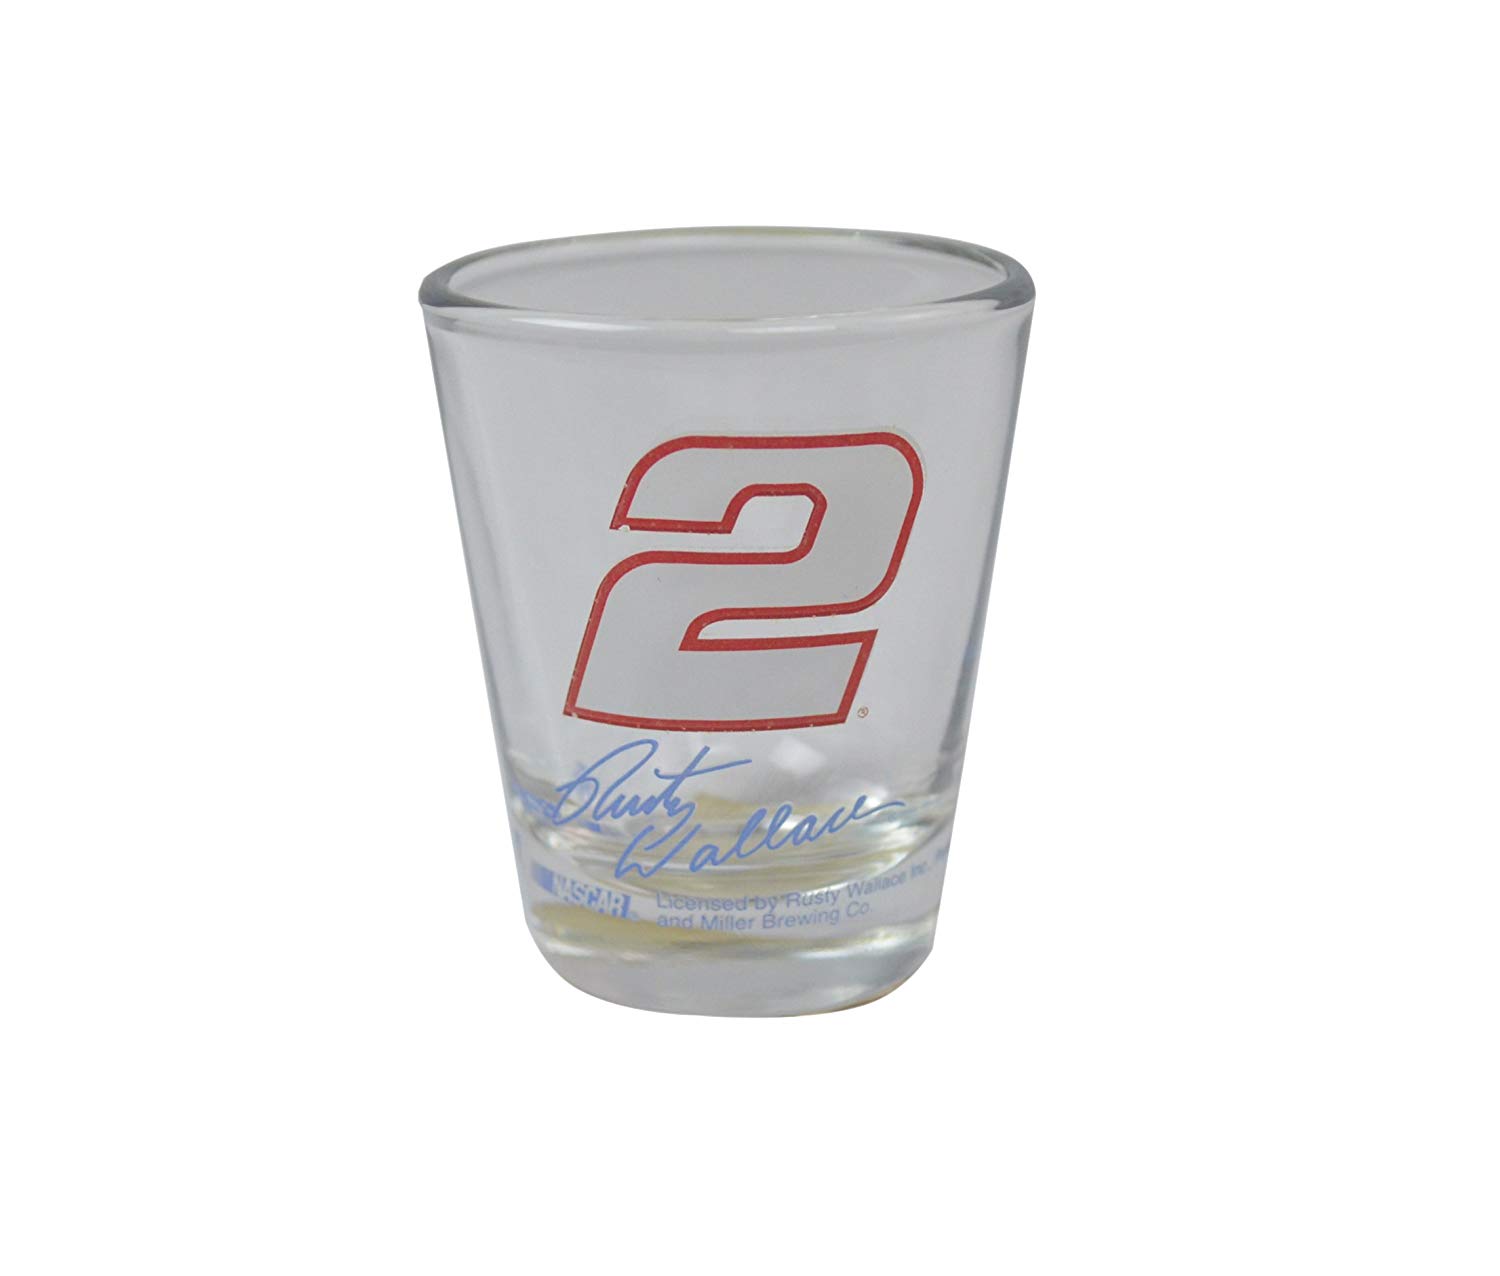 NASCAR Fan Shop 2-Pack 2 oz. Shot Glasses - Great Home Tailgate